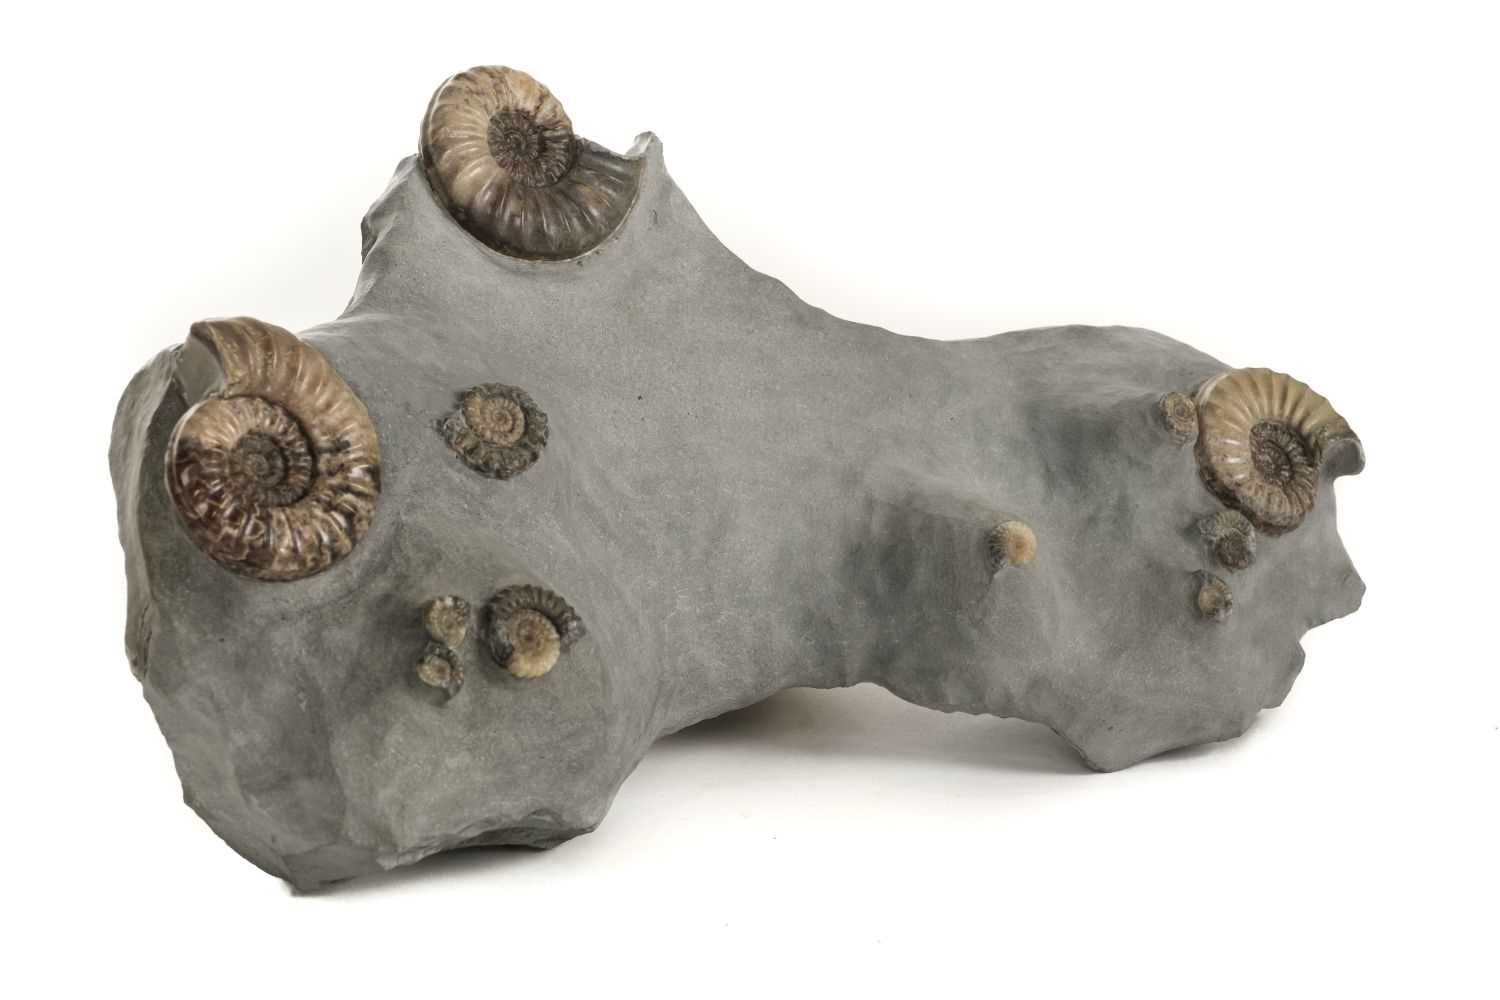 Lot 324 - Ammonites. A multiple ammonite plate, Jurassic Period, Lyme Regis, Dorset